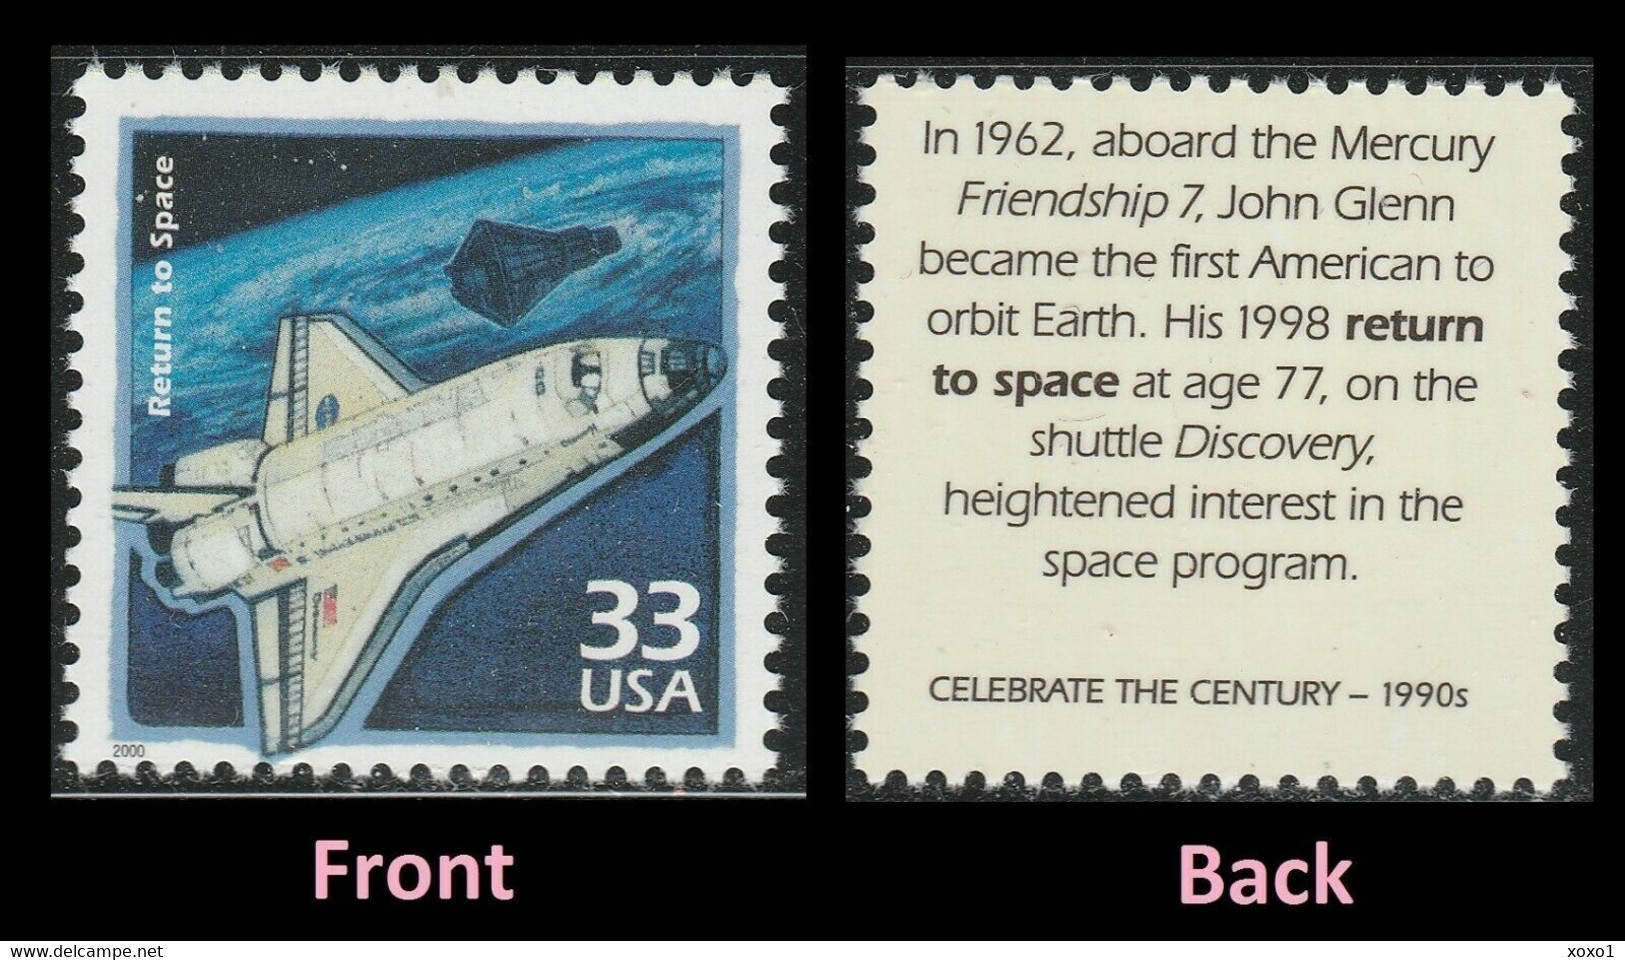 USA 2000 MiNr. 3295 Celebrate The Century 1990s Space Shuttle "Discovery" 1v MNH ** 0,80 € - Nordamerika